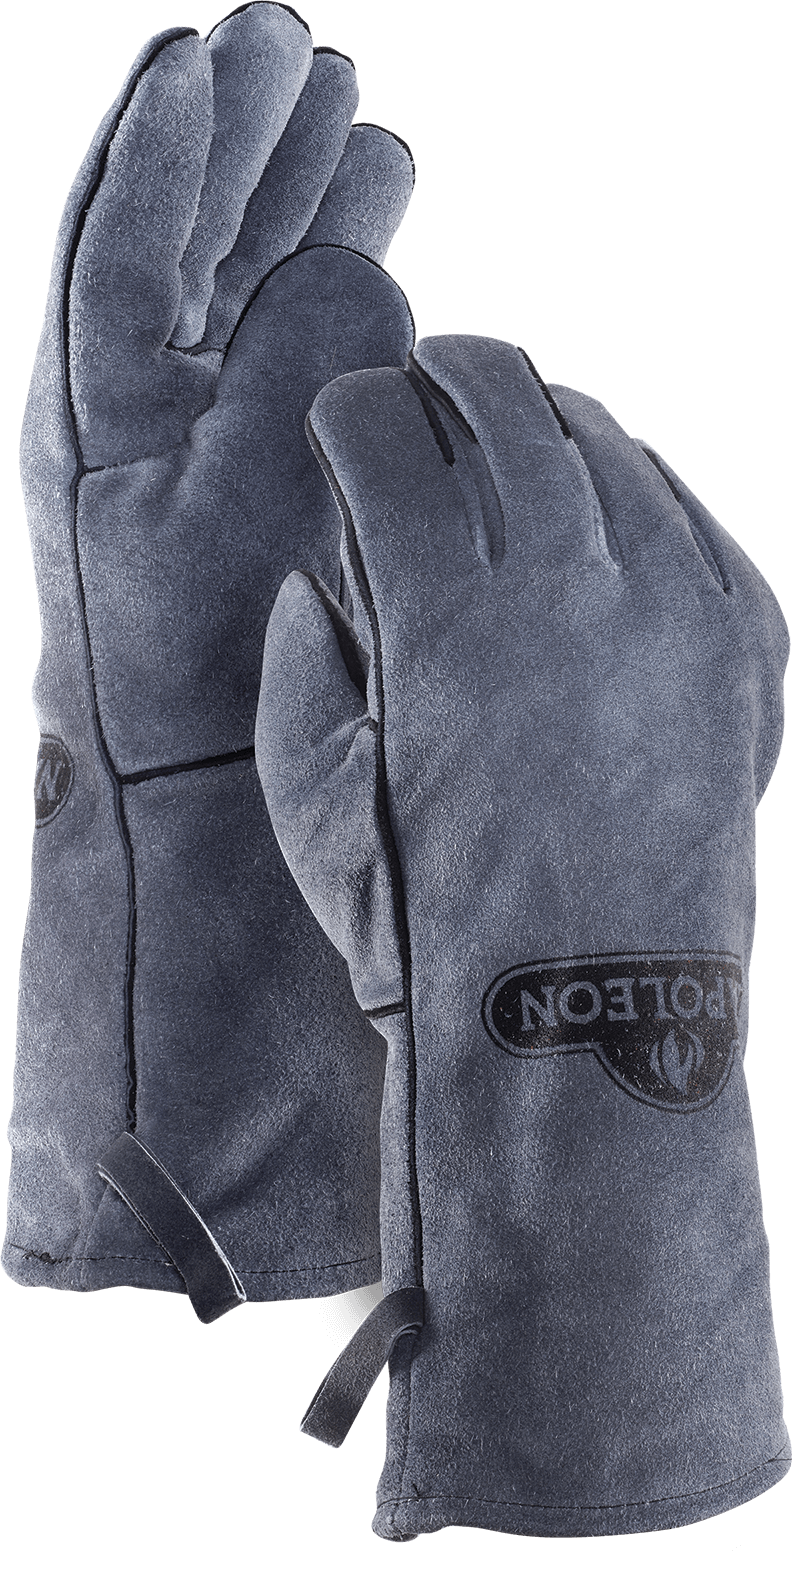 Napoleon Genuine Leather BBQ Gloves 62147